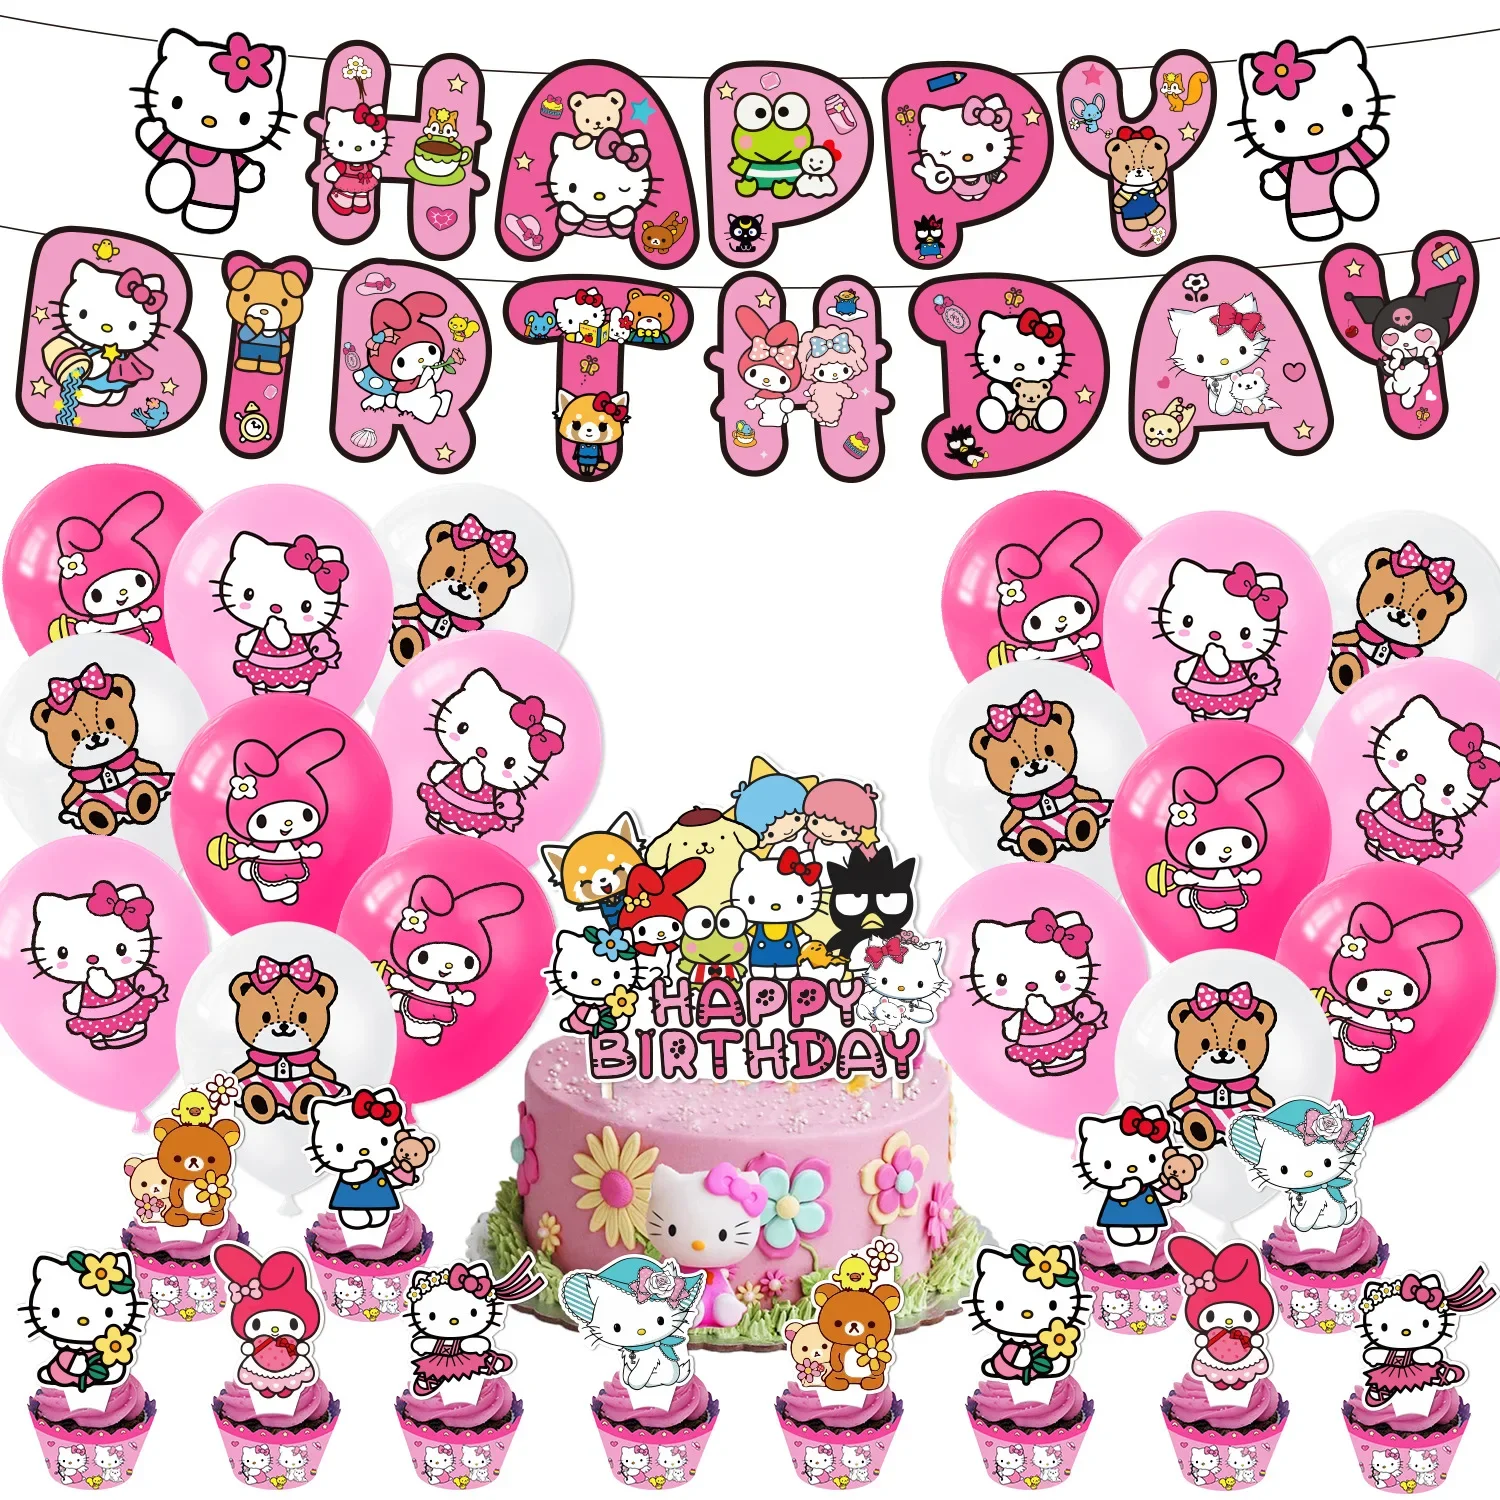 

1 Set Birthday Party Decorations, Sanrio Hello Kitty Theme Party Decor, Celebration Decor, Birthday Gift, Party Decor Supplies